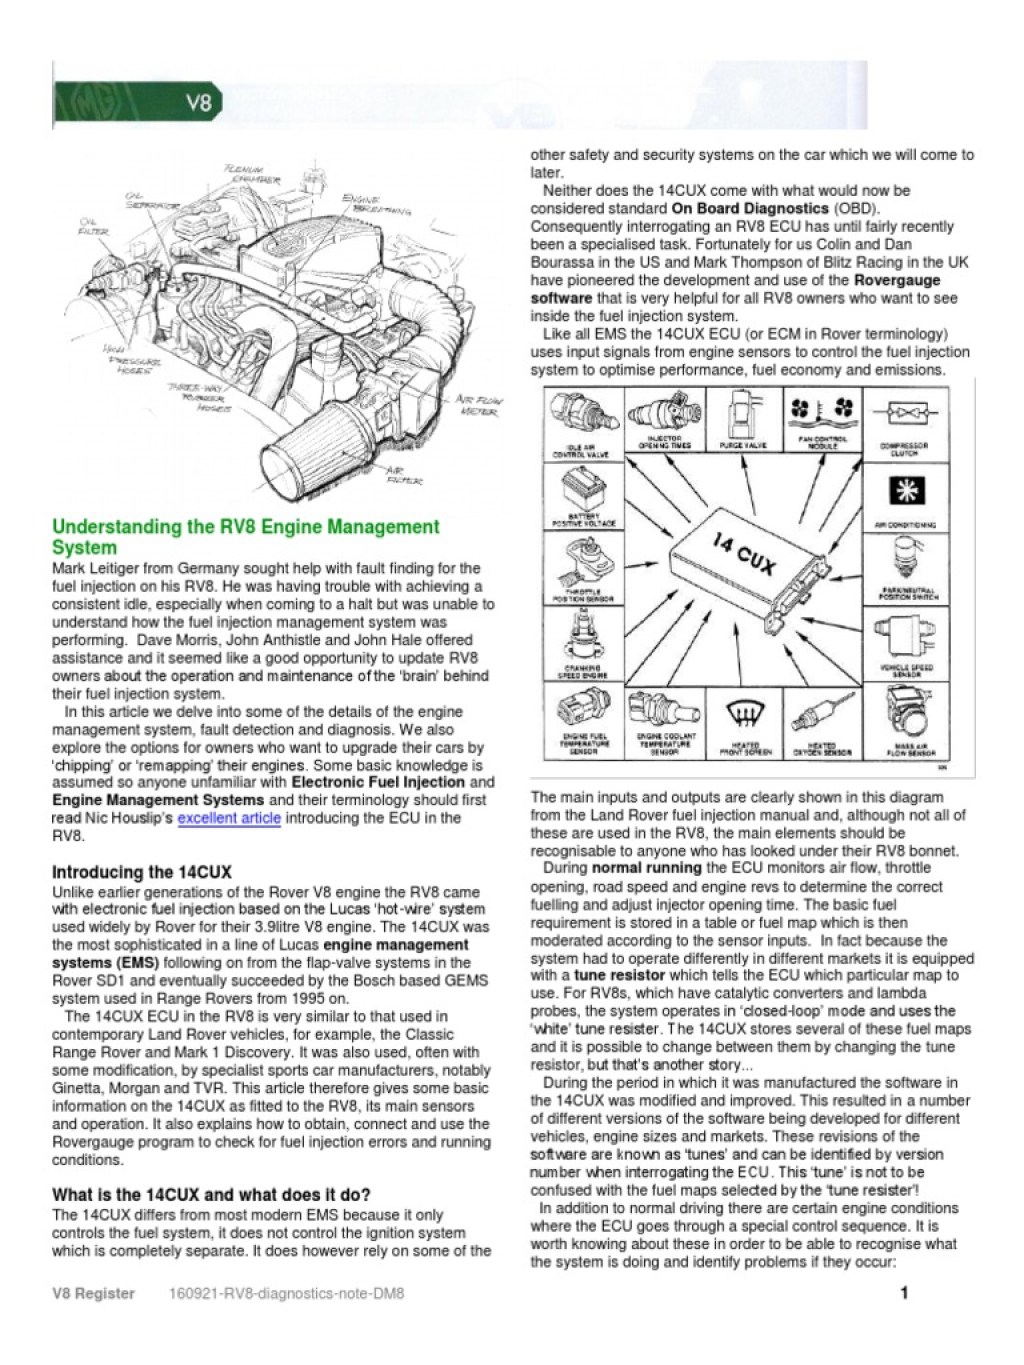 Picture of: RV Diagnostics Note DM  PDF  Throttle  Fuel Injection